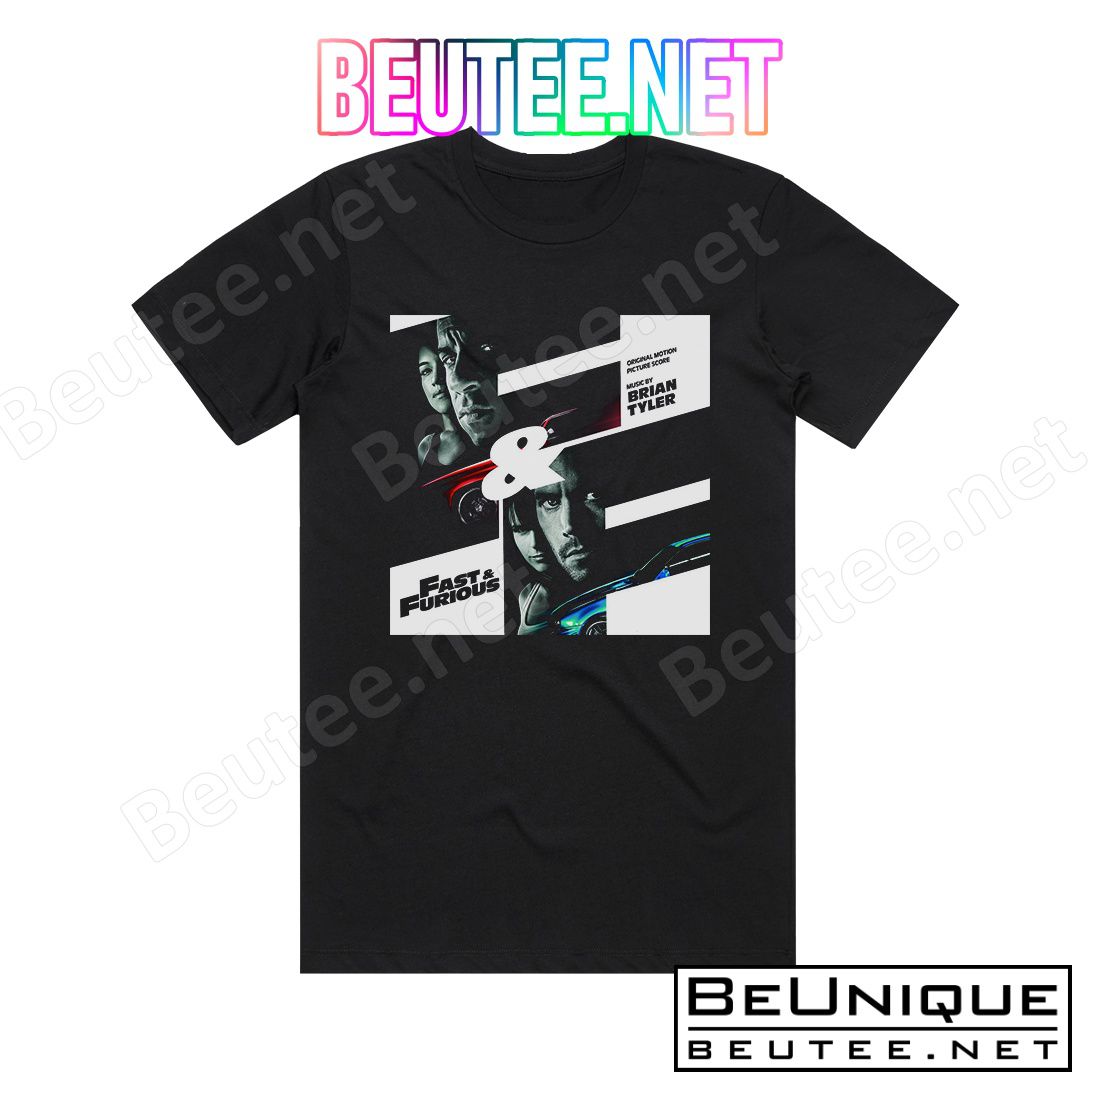 Brian Tyler Fast Furious Album Cover T-Shirt